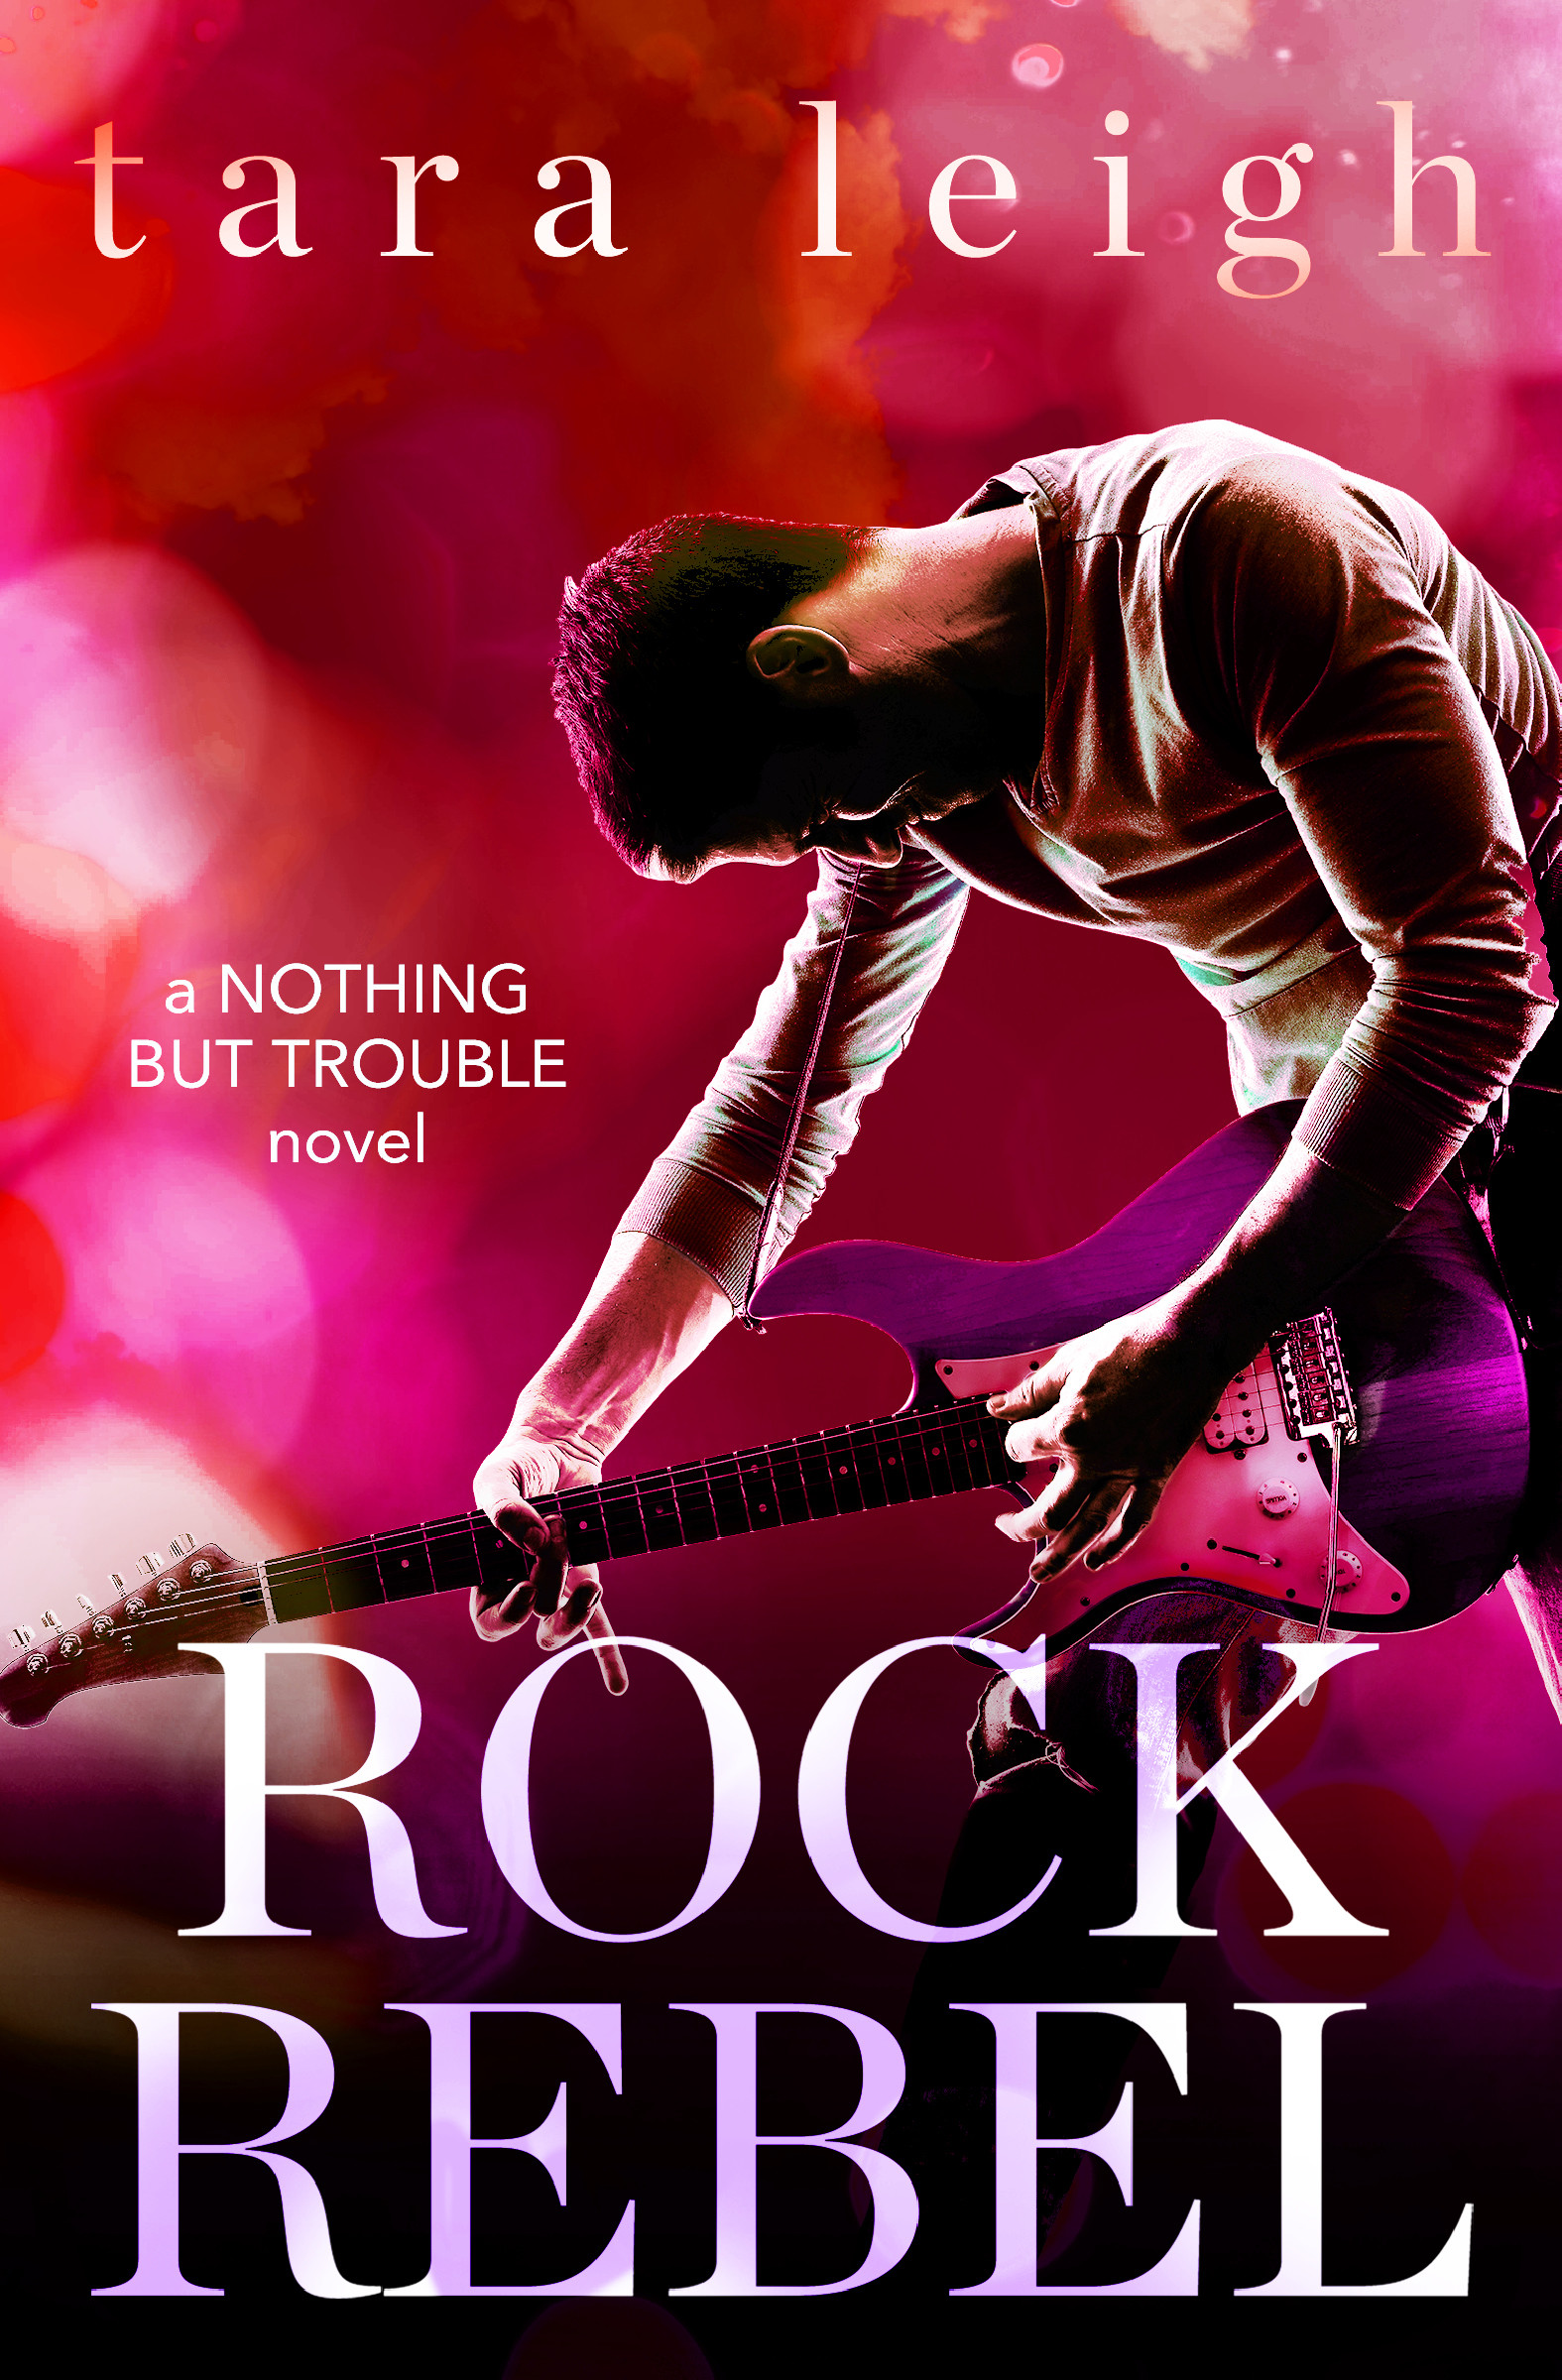 Rock Rebel by Tara Leigh [Review]